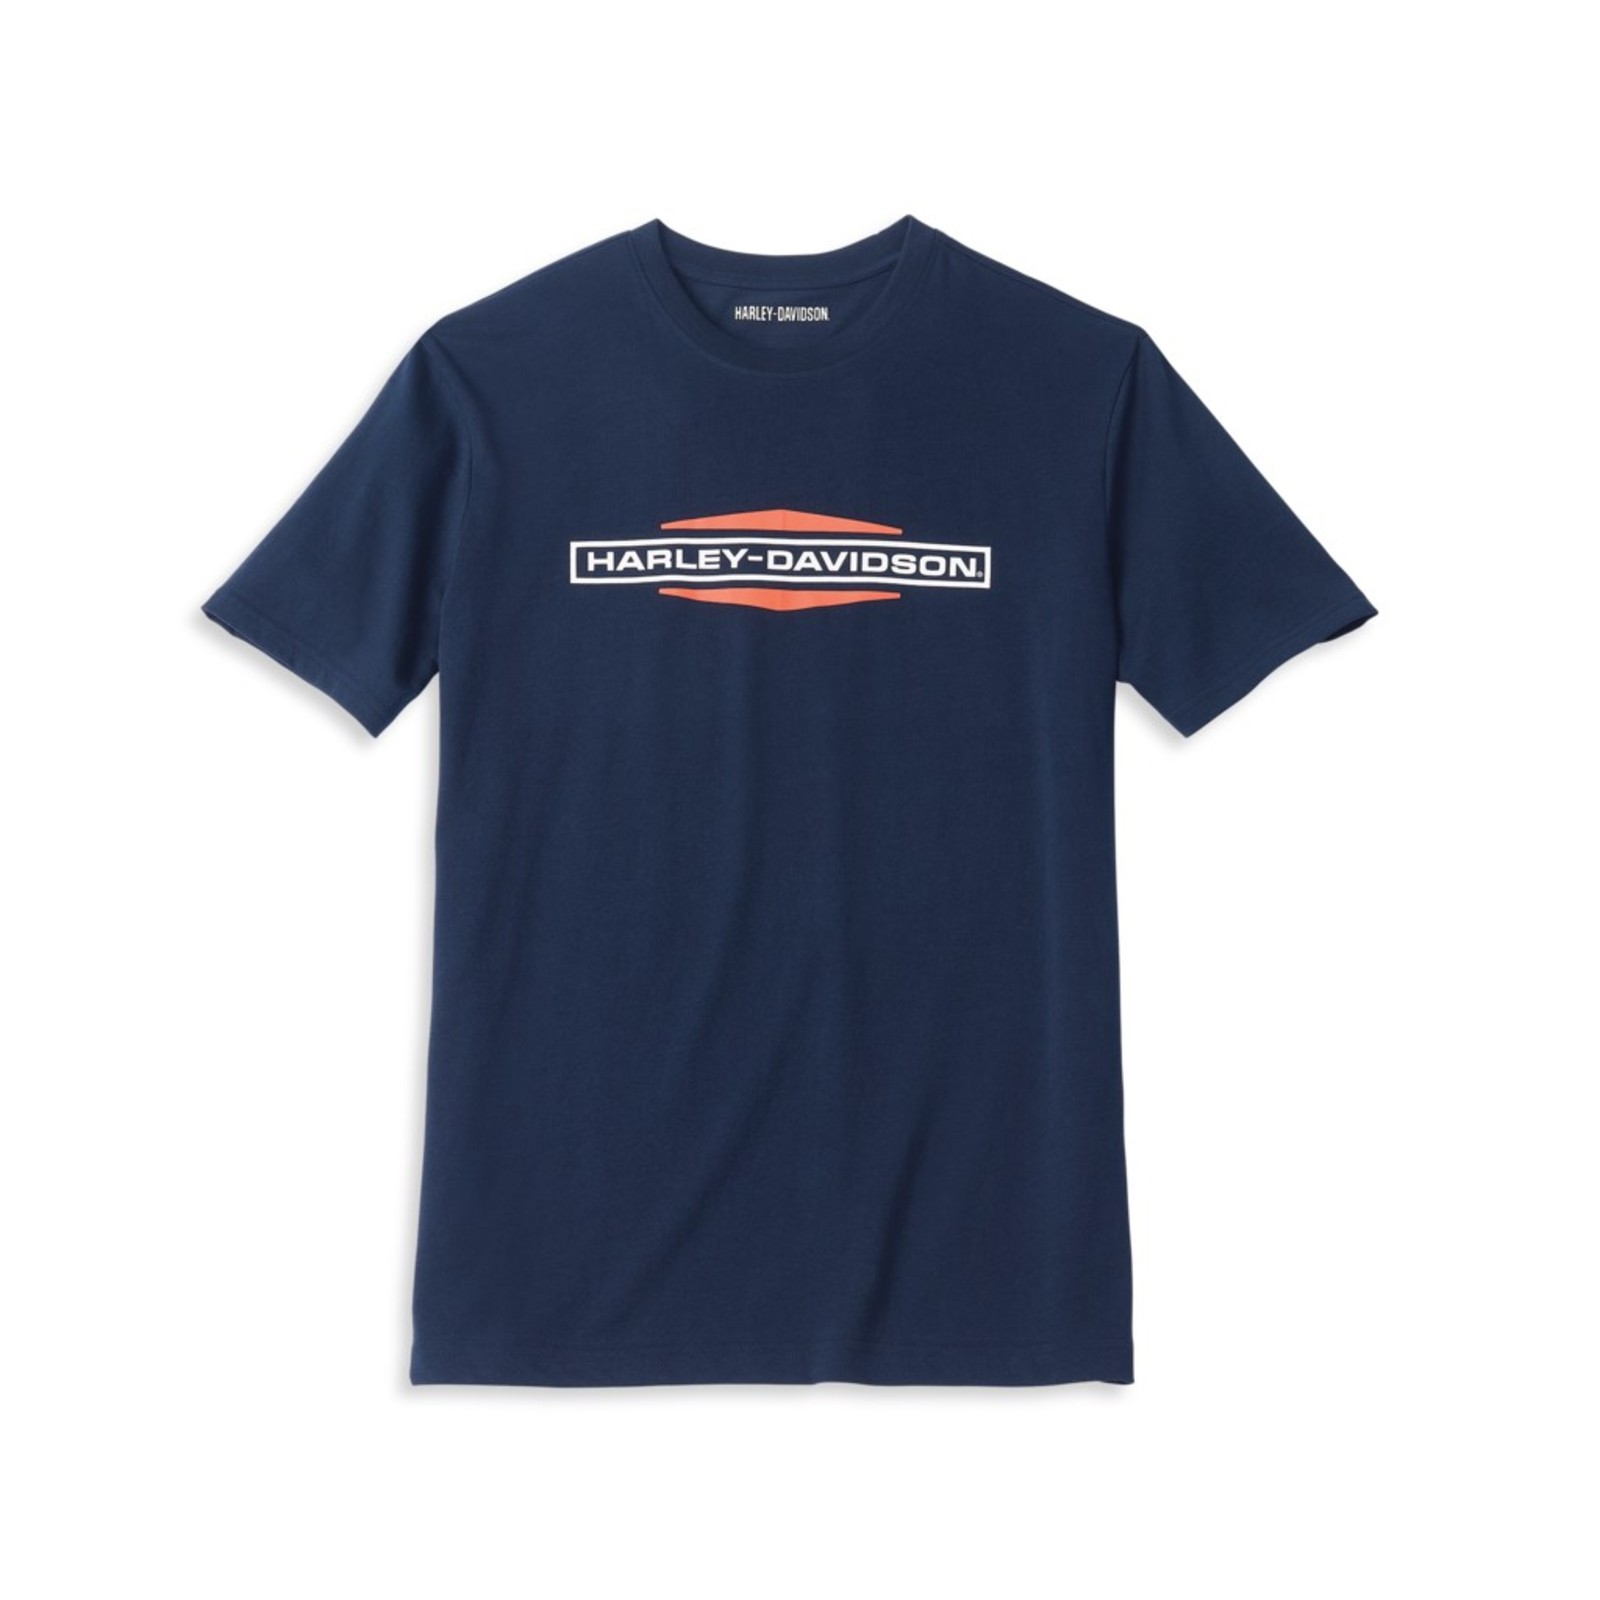 HARLEY-DAVIDSON Herren T-Shirt aus Baumwolle Stacked Graphic Tee Shirt Kurzarm 